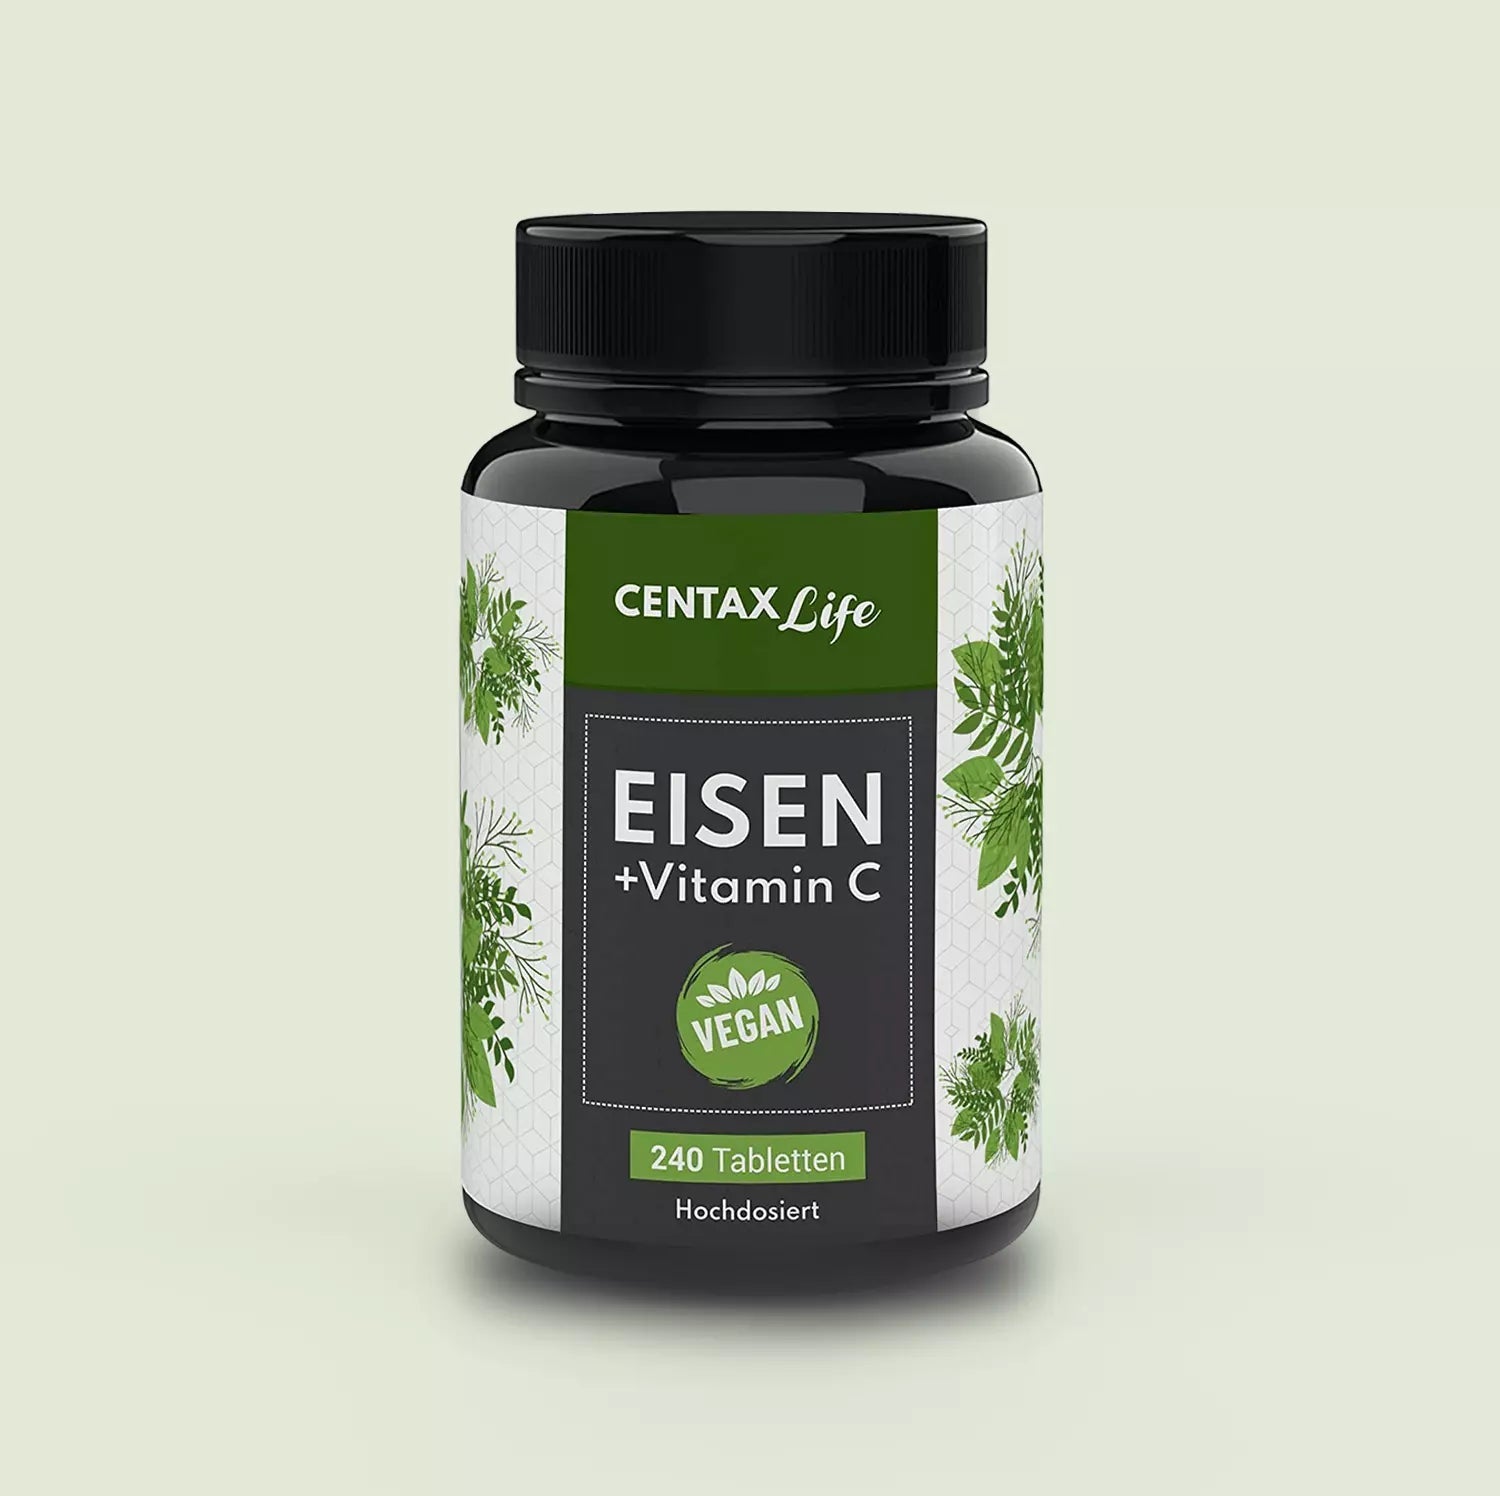 Eisen+Vitamin C (240 Vegan Tabletten) - Centax Life